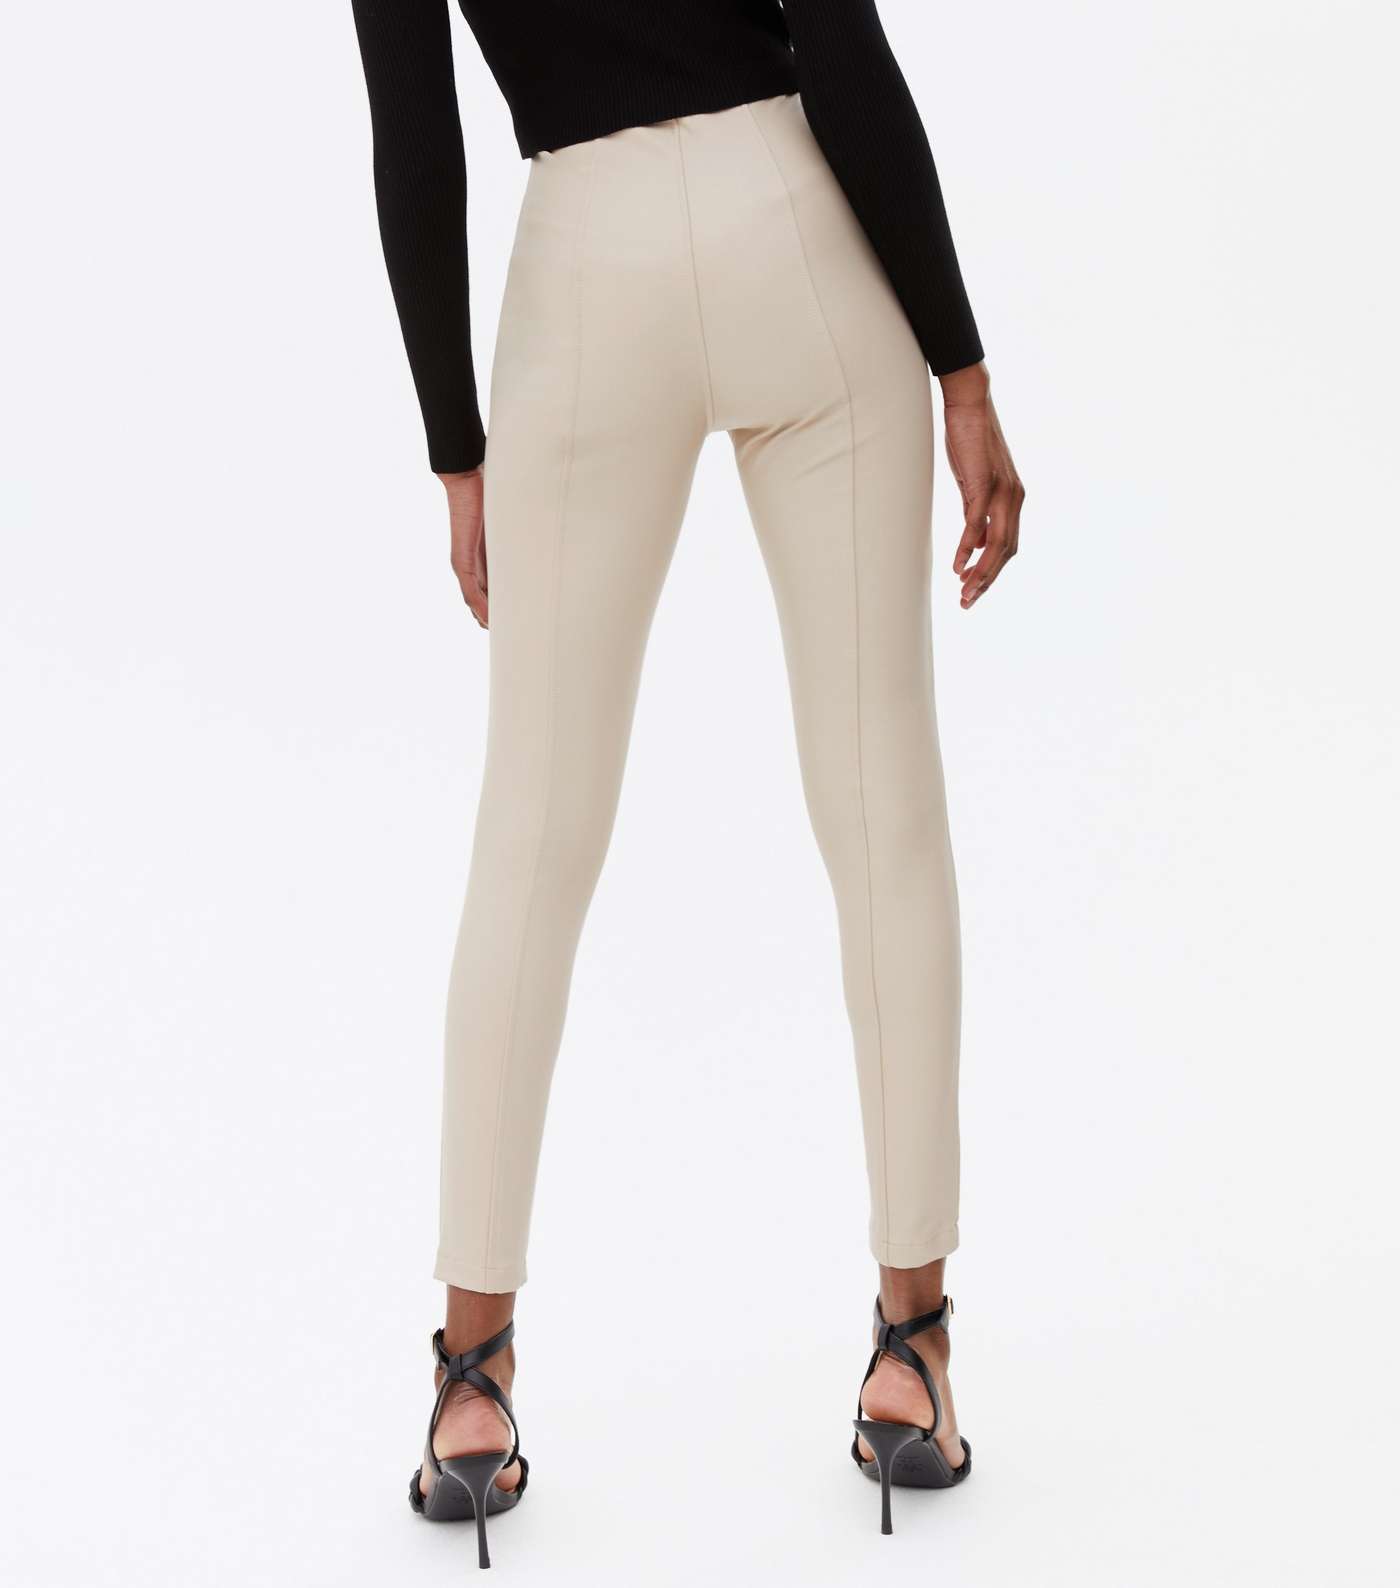 Cream Leather-Look High Waist Zip Leggings Image 4